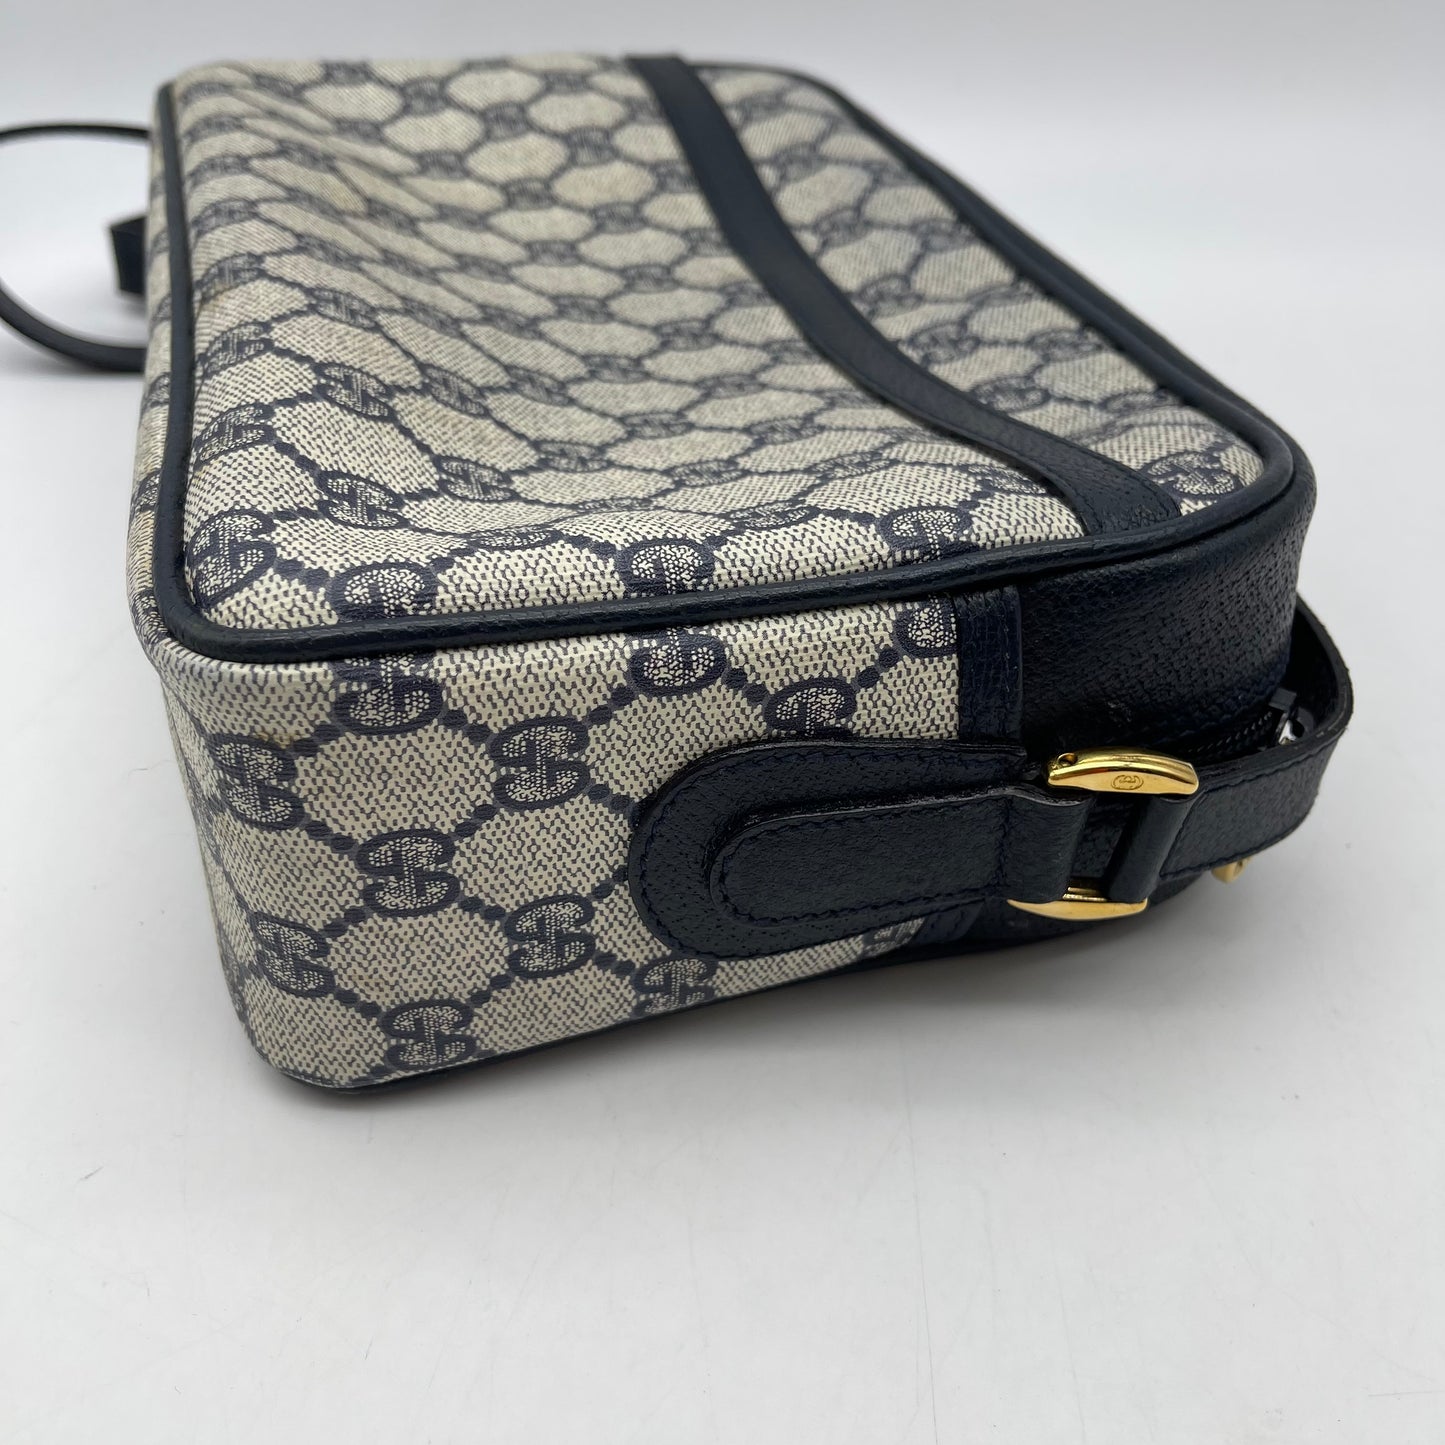 Handbag Luxury Designer By Gucci  Size: Medium